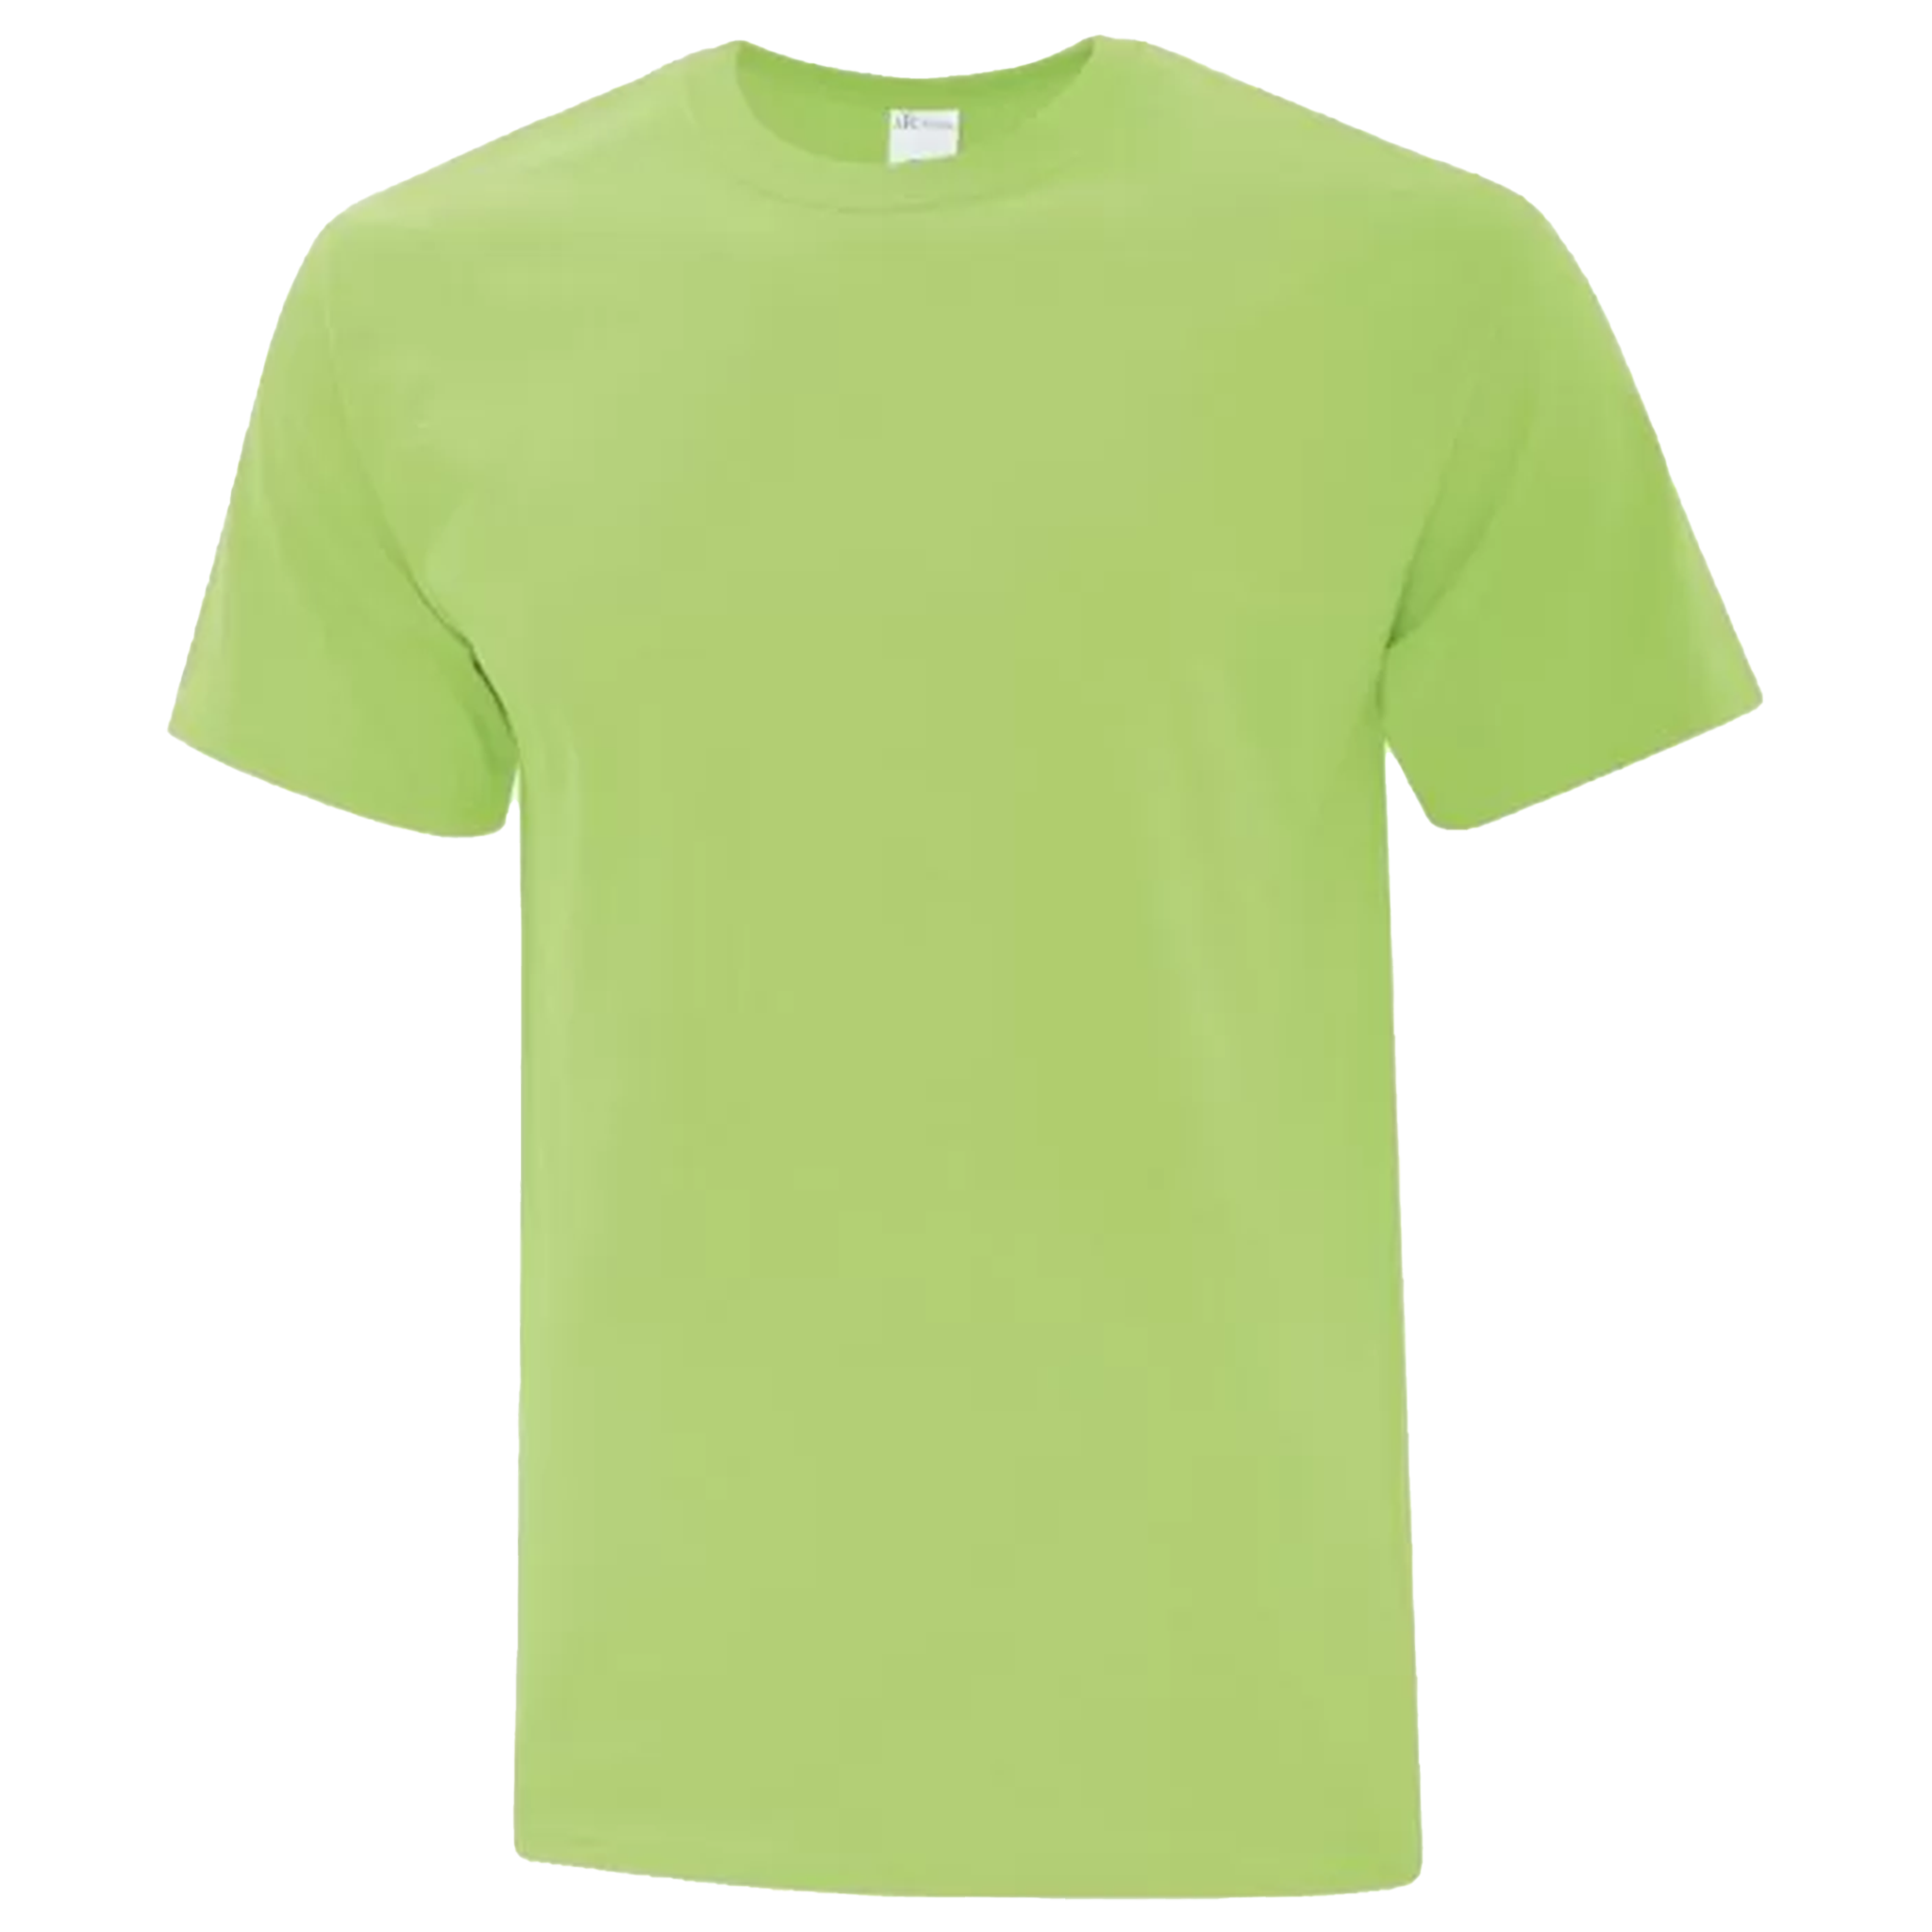 ATC Everyday Cotton T-Shirt - Men's Sizing S-4XL - Kiwi